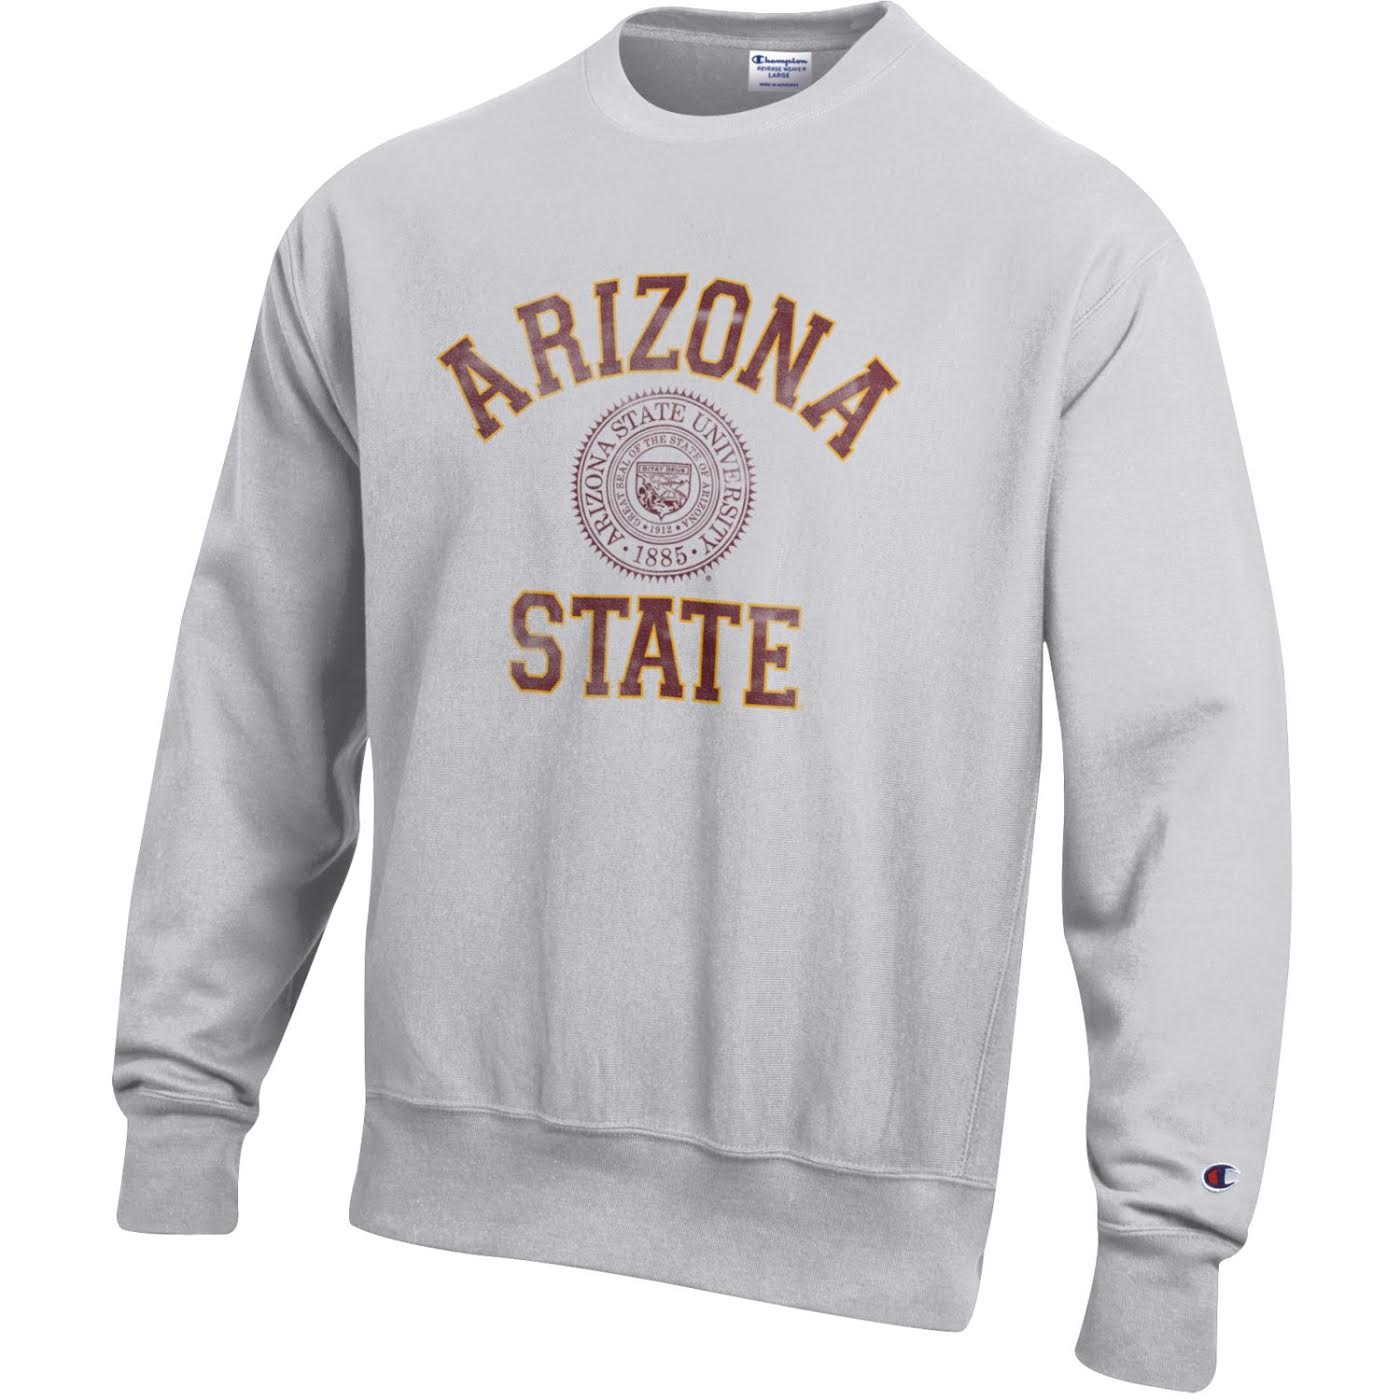 ASU gray crewneck with Arizona state written in maroon around Vault seal print on chest.